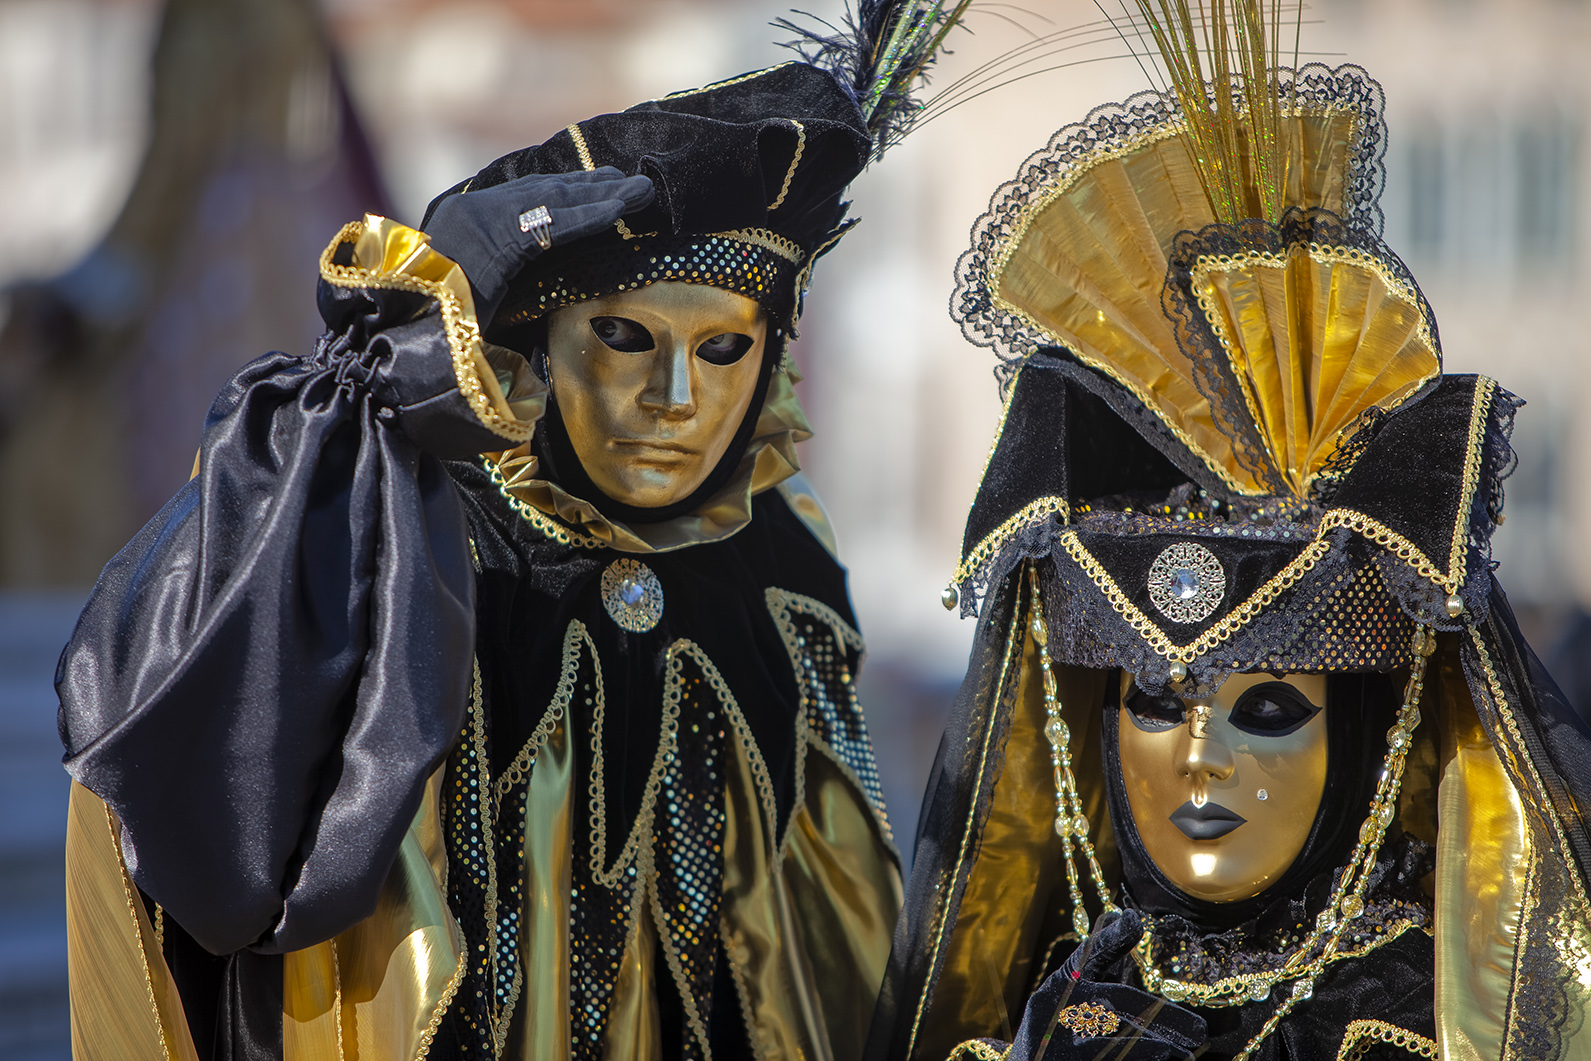 6083C Karneval in Venedig Paar in Gold und Schwarz